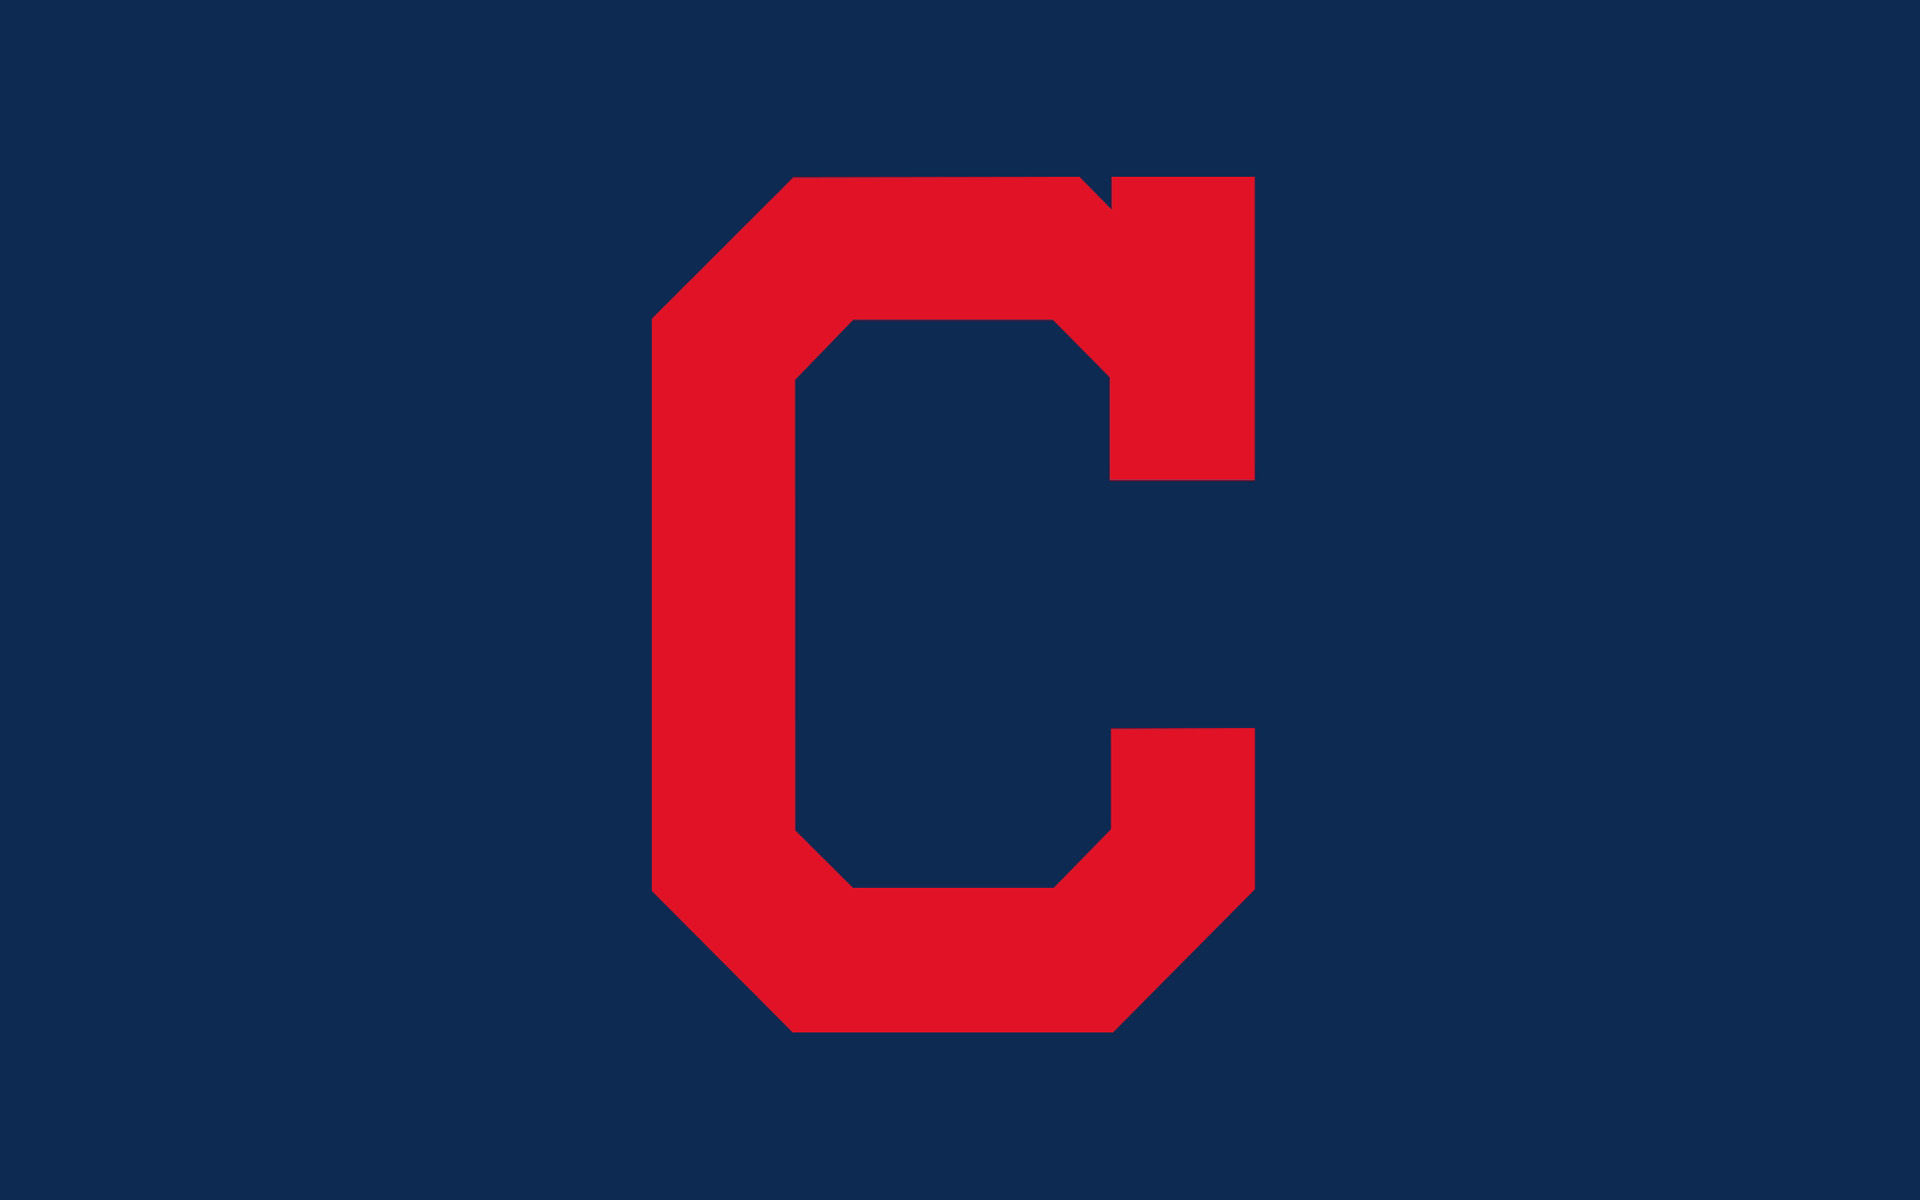 Cleveland Indians Mlb Baseball Wallpaper Background